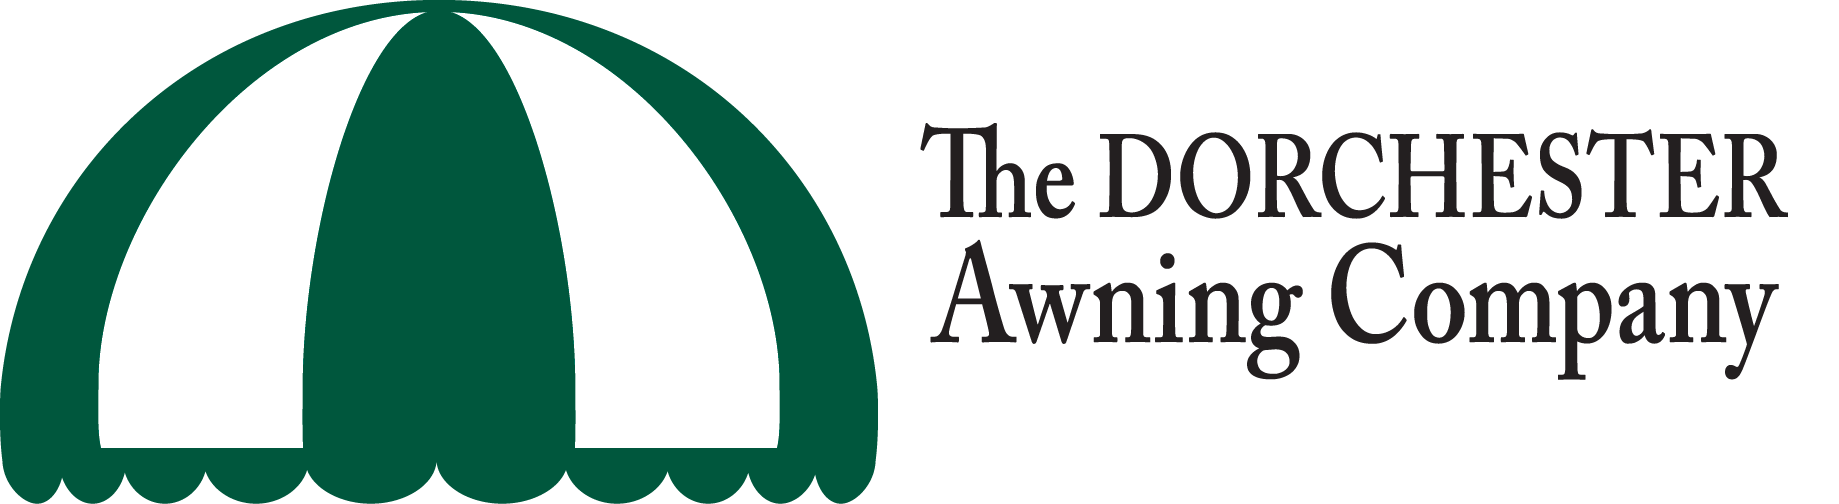 Dorchester Awning Co. logo